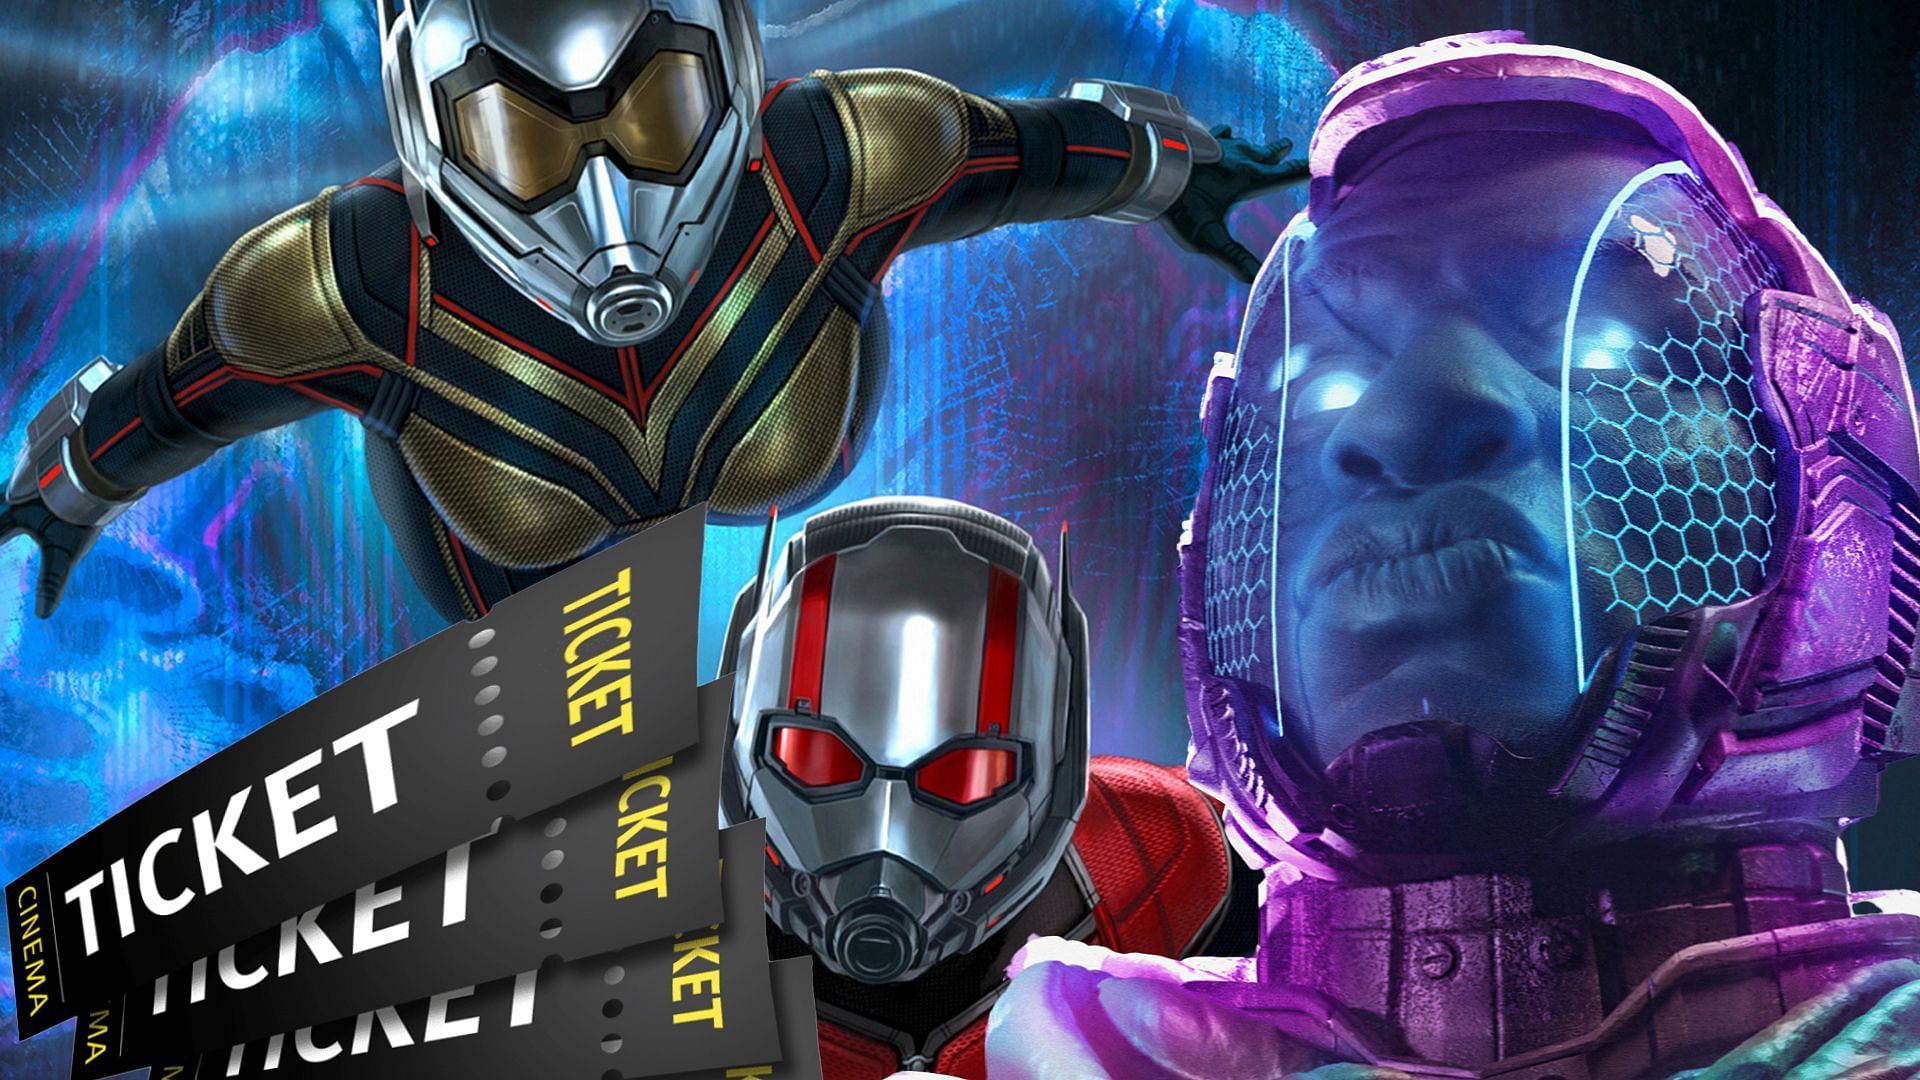 Ant-Man 3's Marvel Studios Legends Episode Release Date Announced